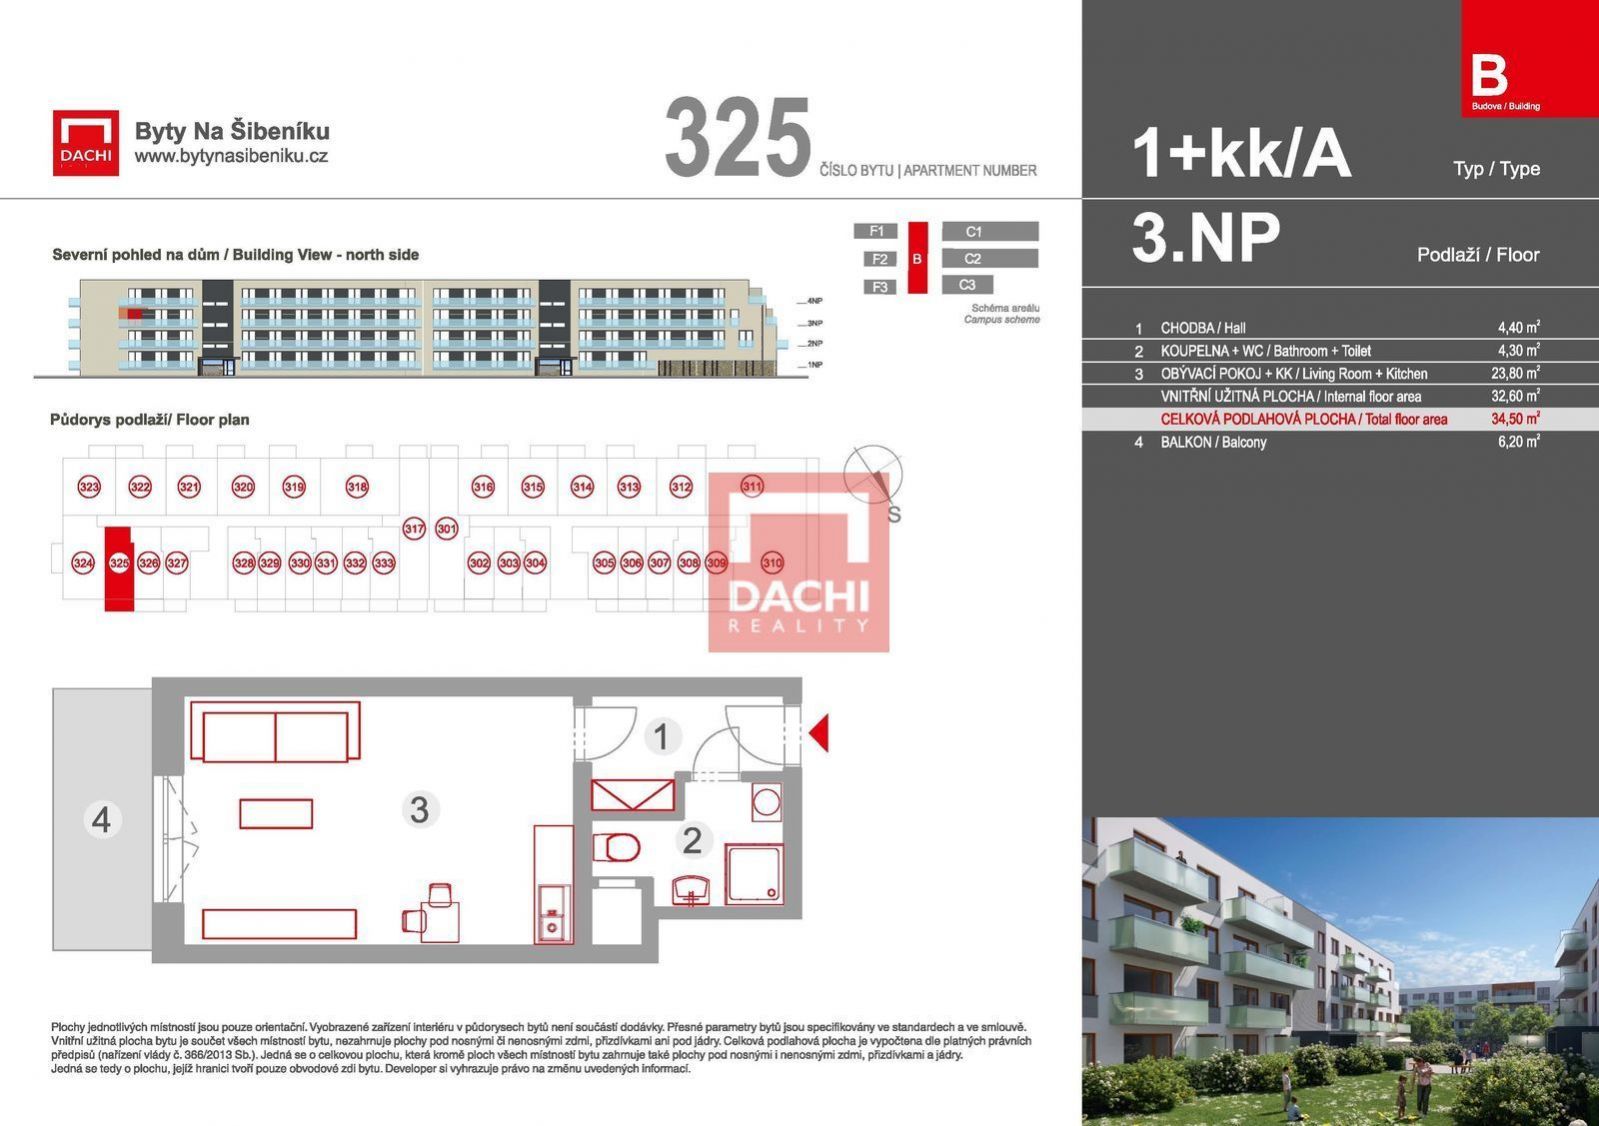 Prodej ateliéru B.325  1+kk 34,50m s balkonem 6,20m, Olomouc, Byty Na Šibeníku II.etapa, obrázek č. 3